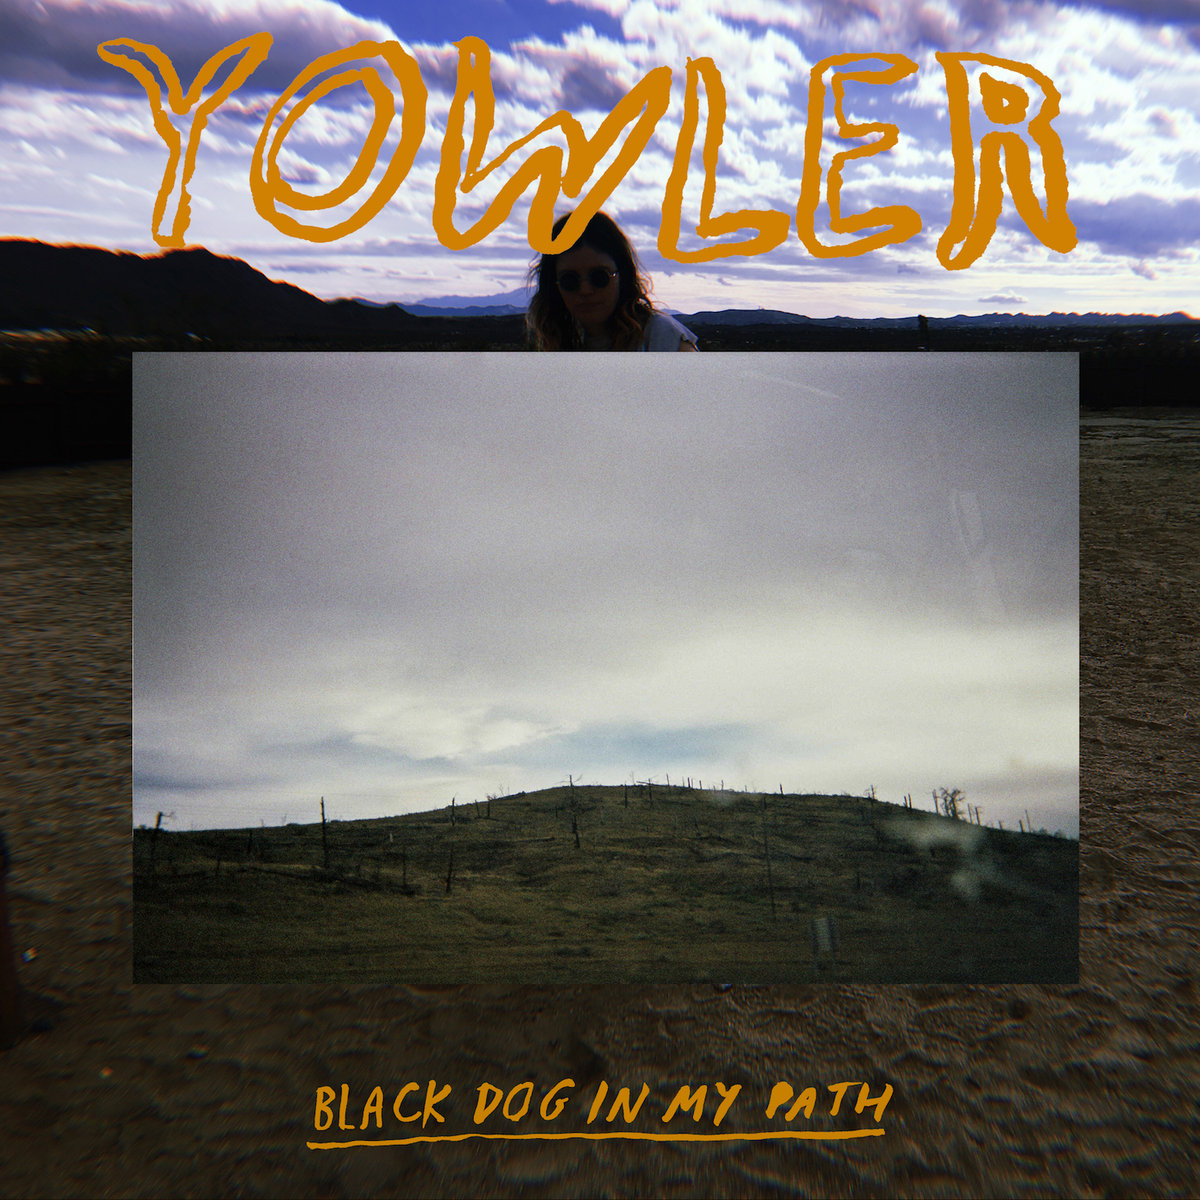 yowler black dog in my path album art